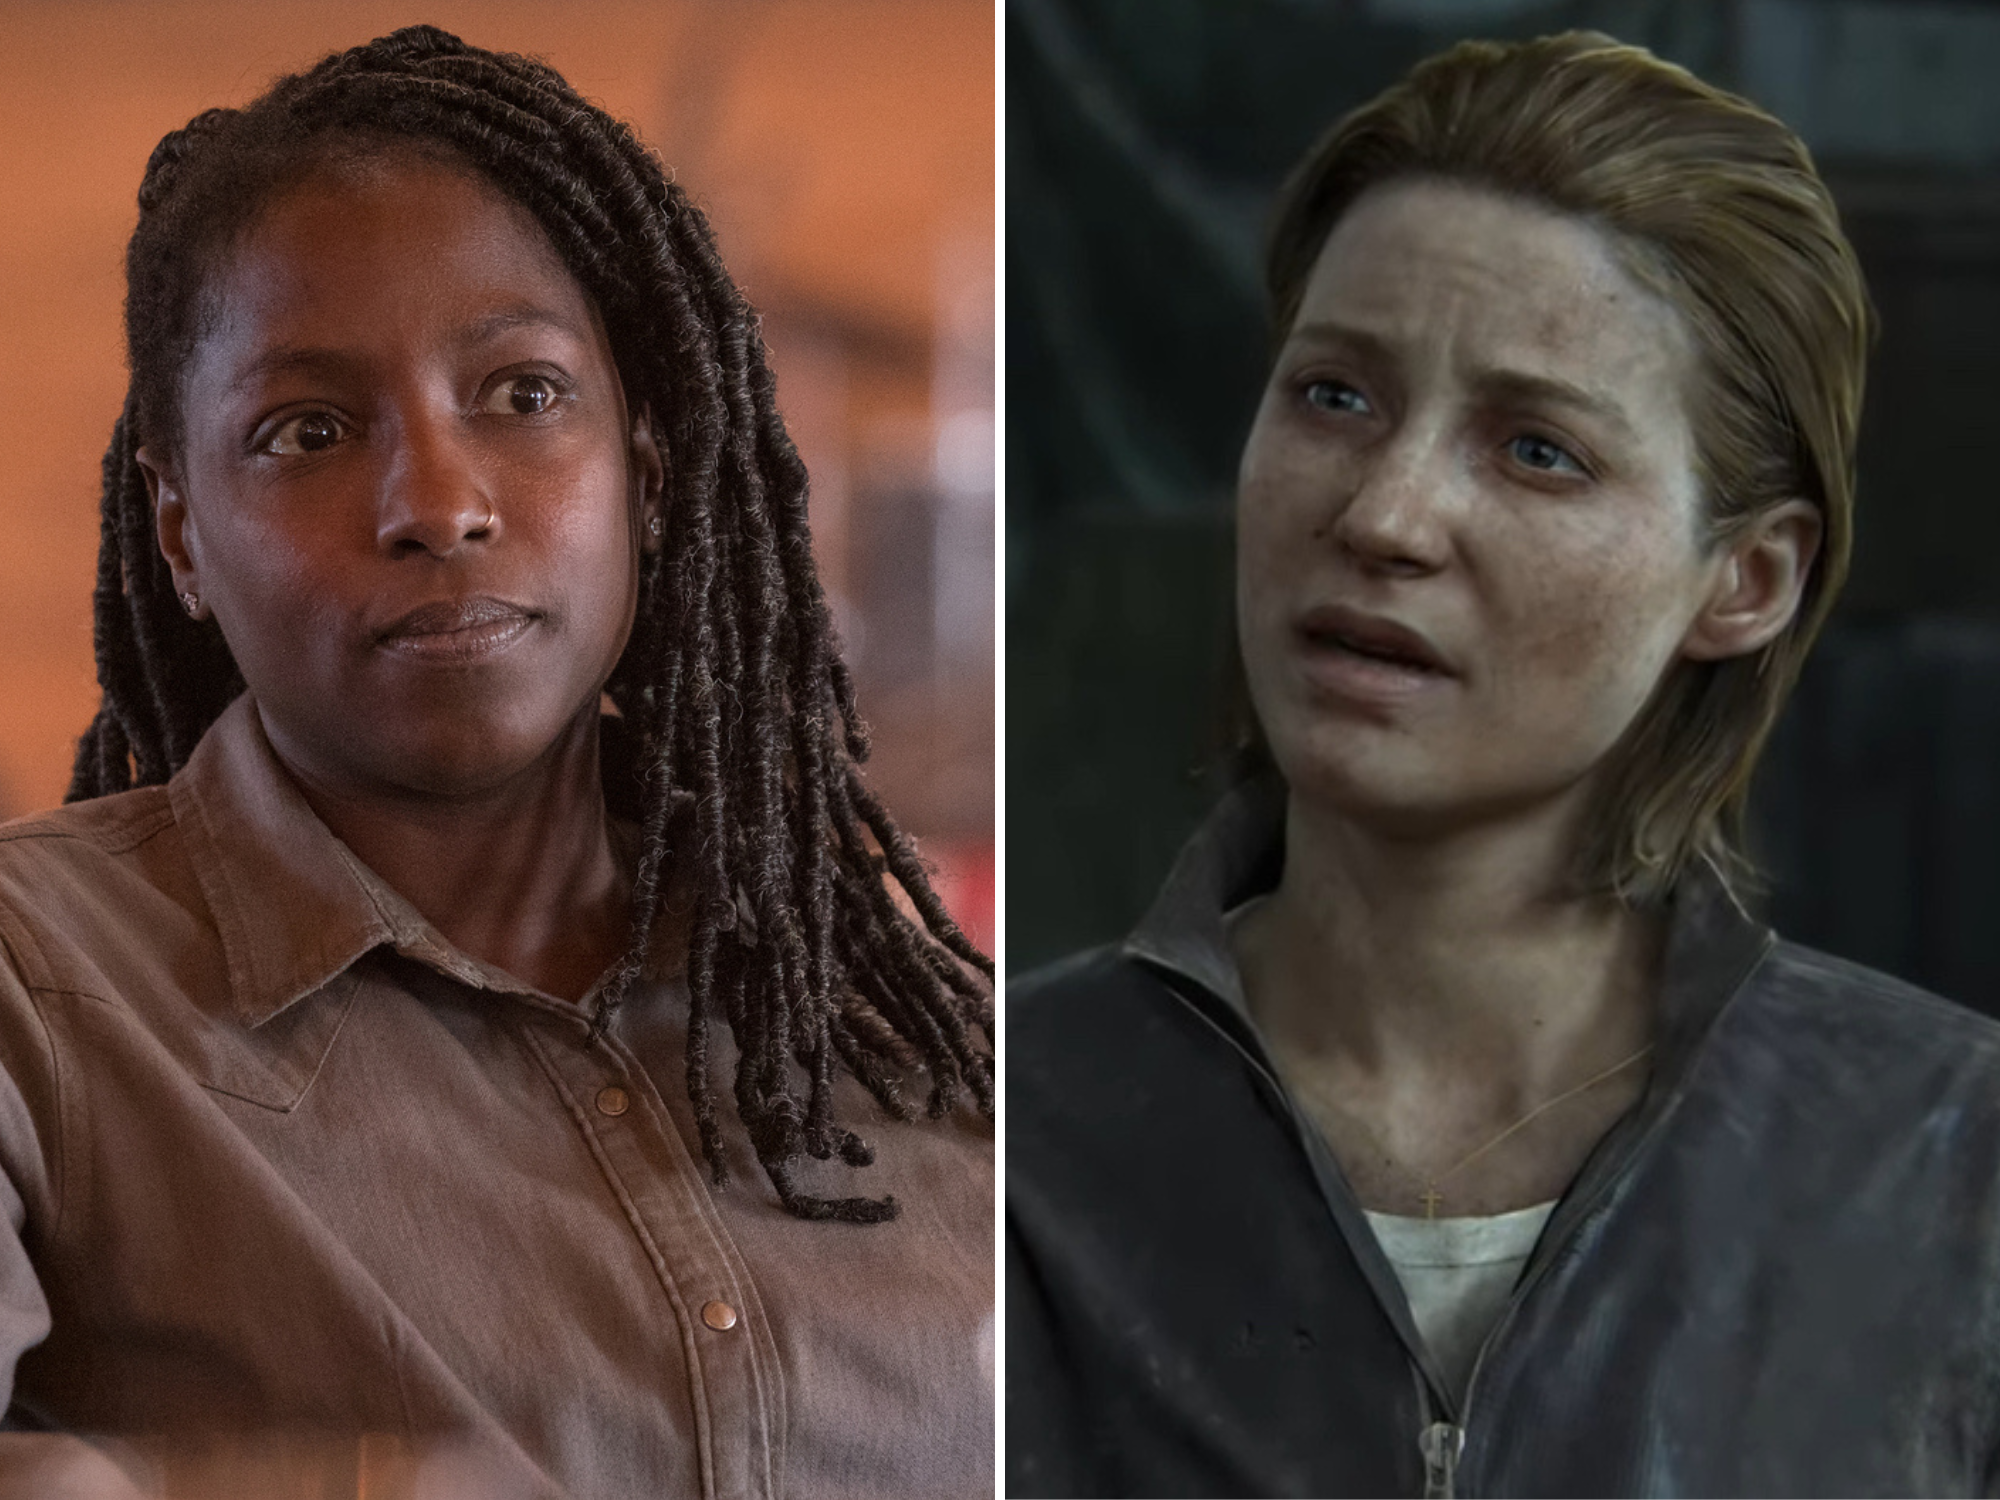 The Last of Us Episode 1: TV Show vs Game Comparison 